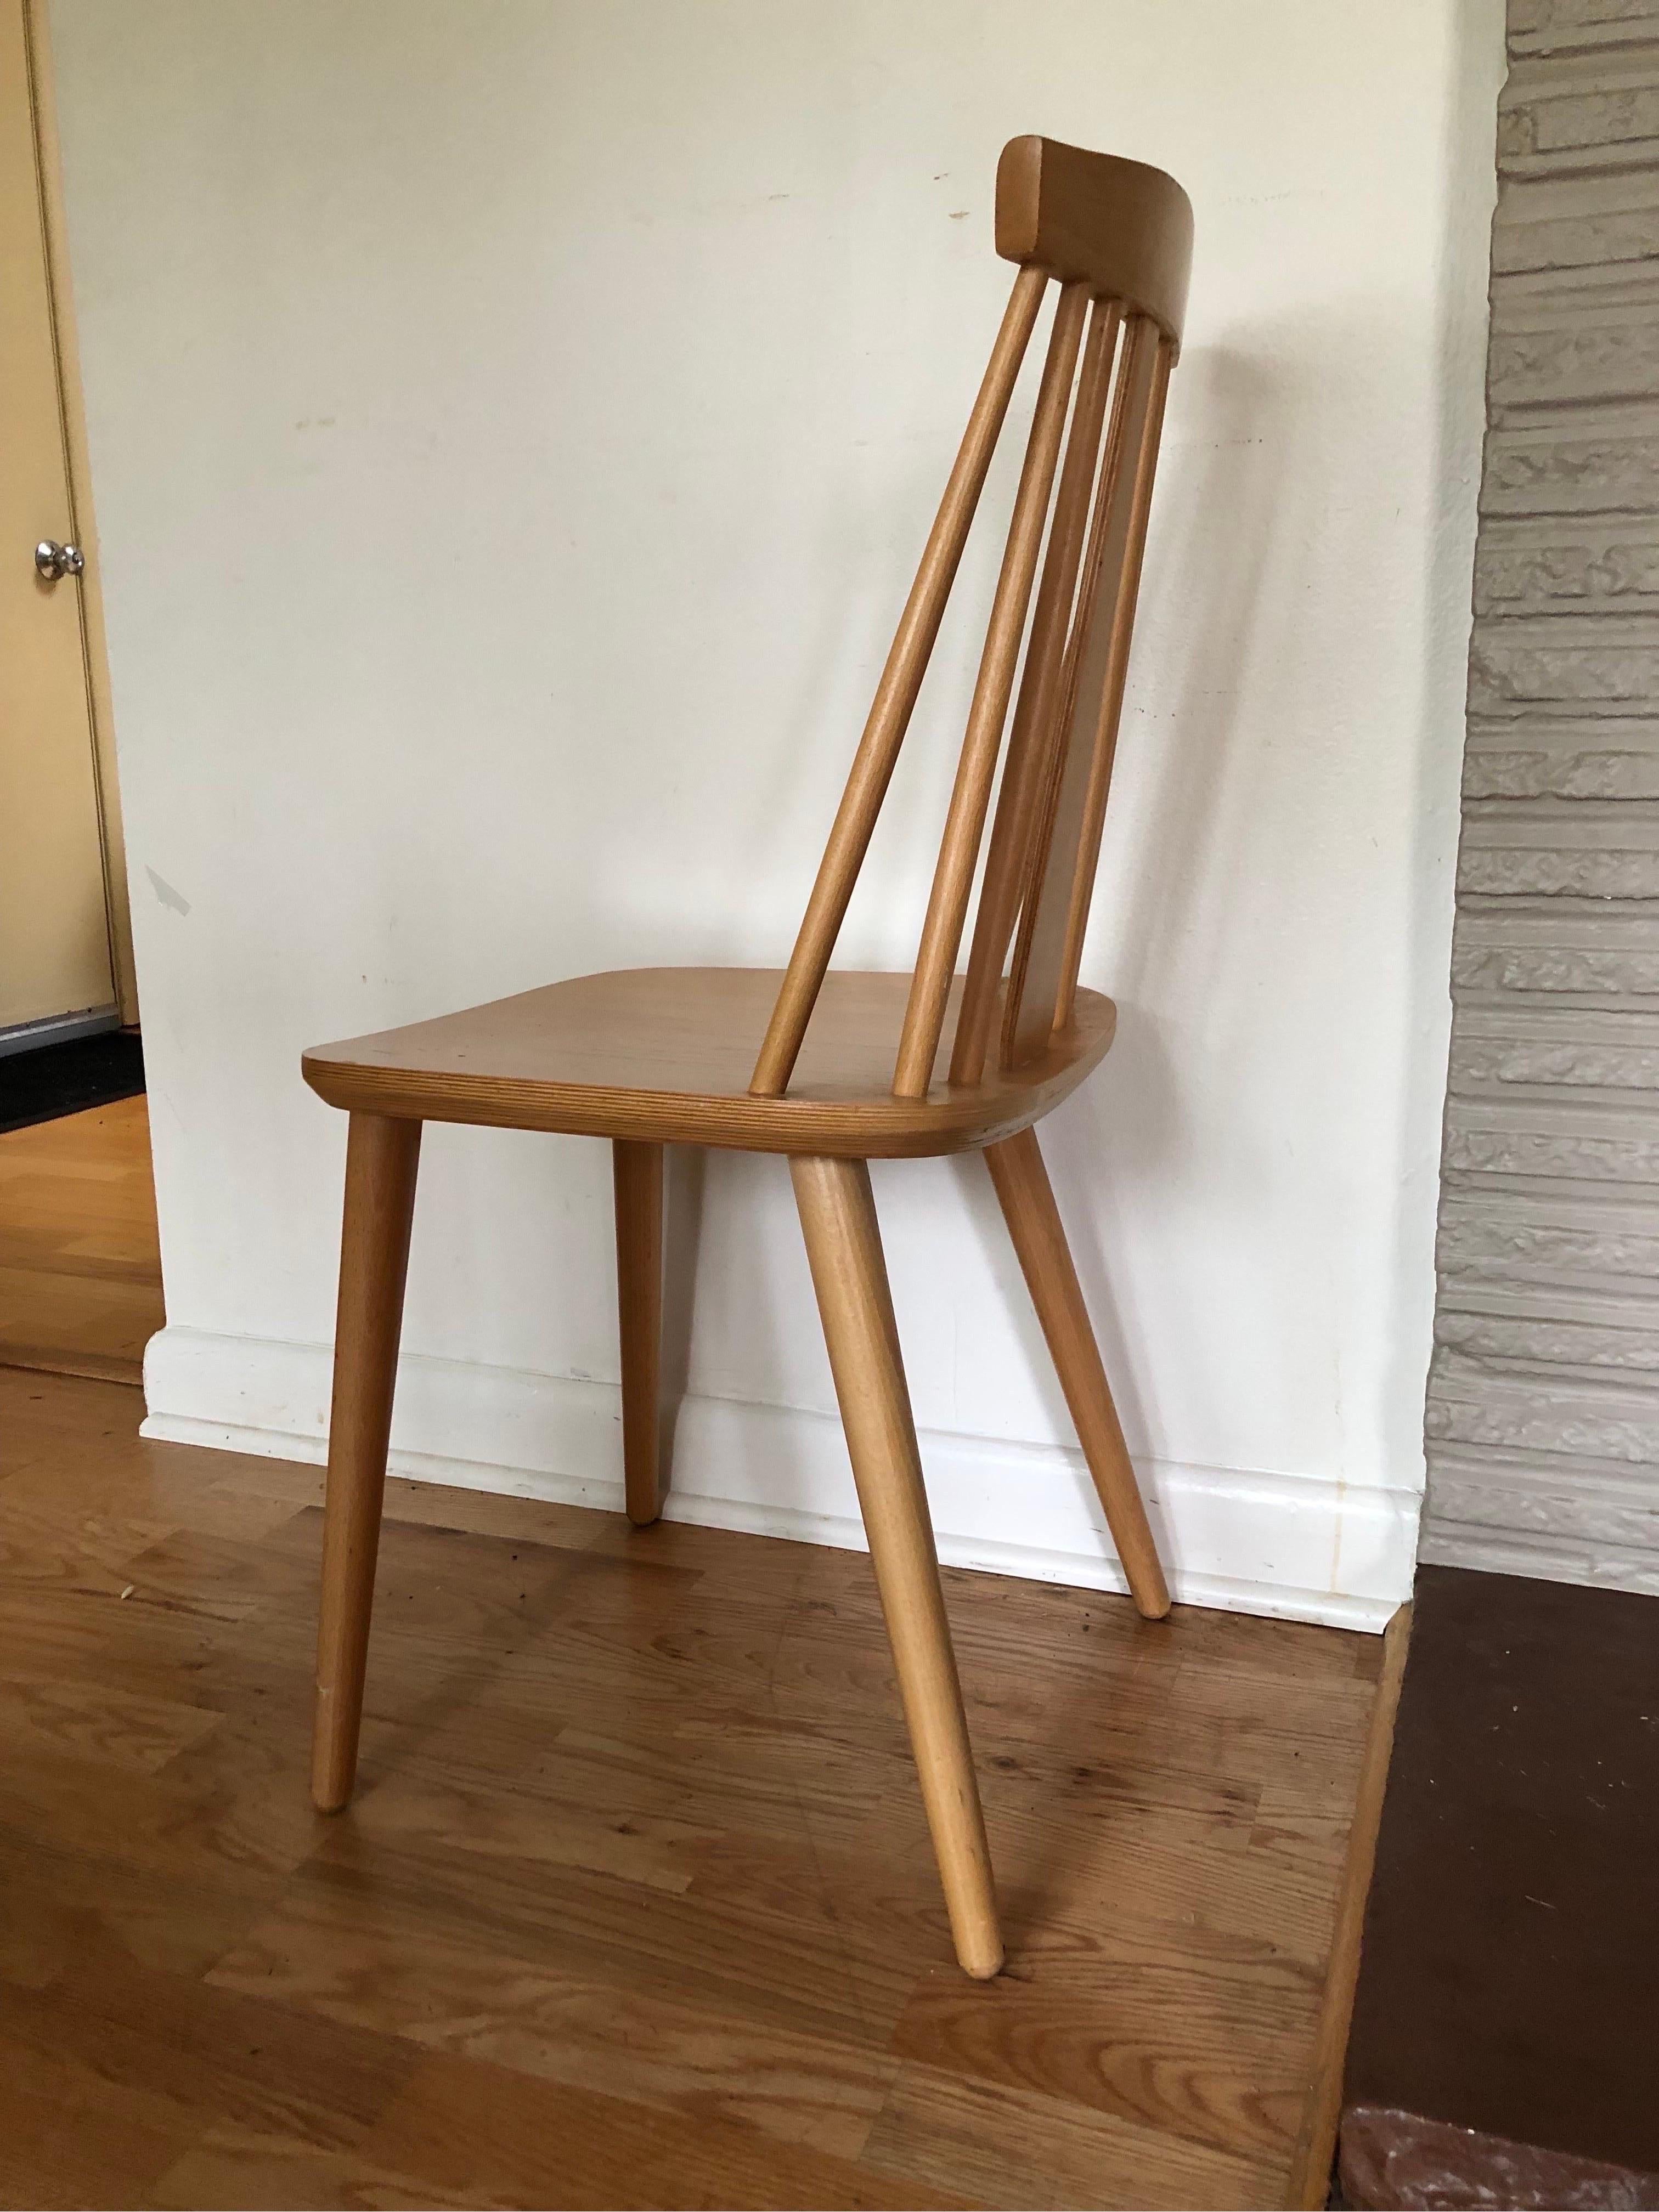 Mid-Century Modern Vintage Mid Century Modern Chair Made in by Poland Radomsko For Sale